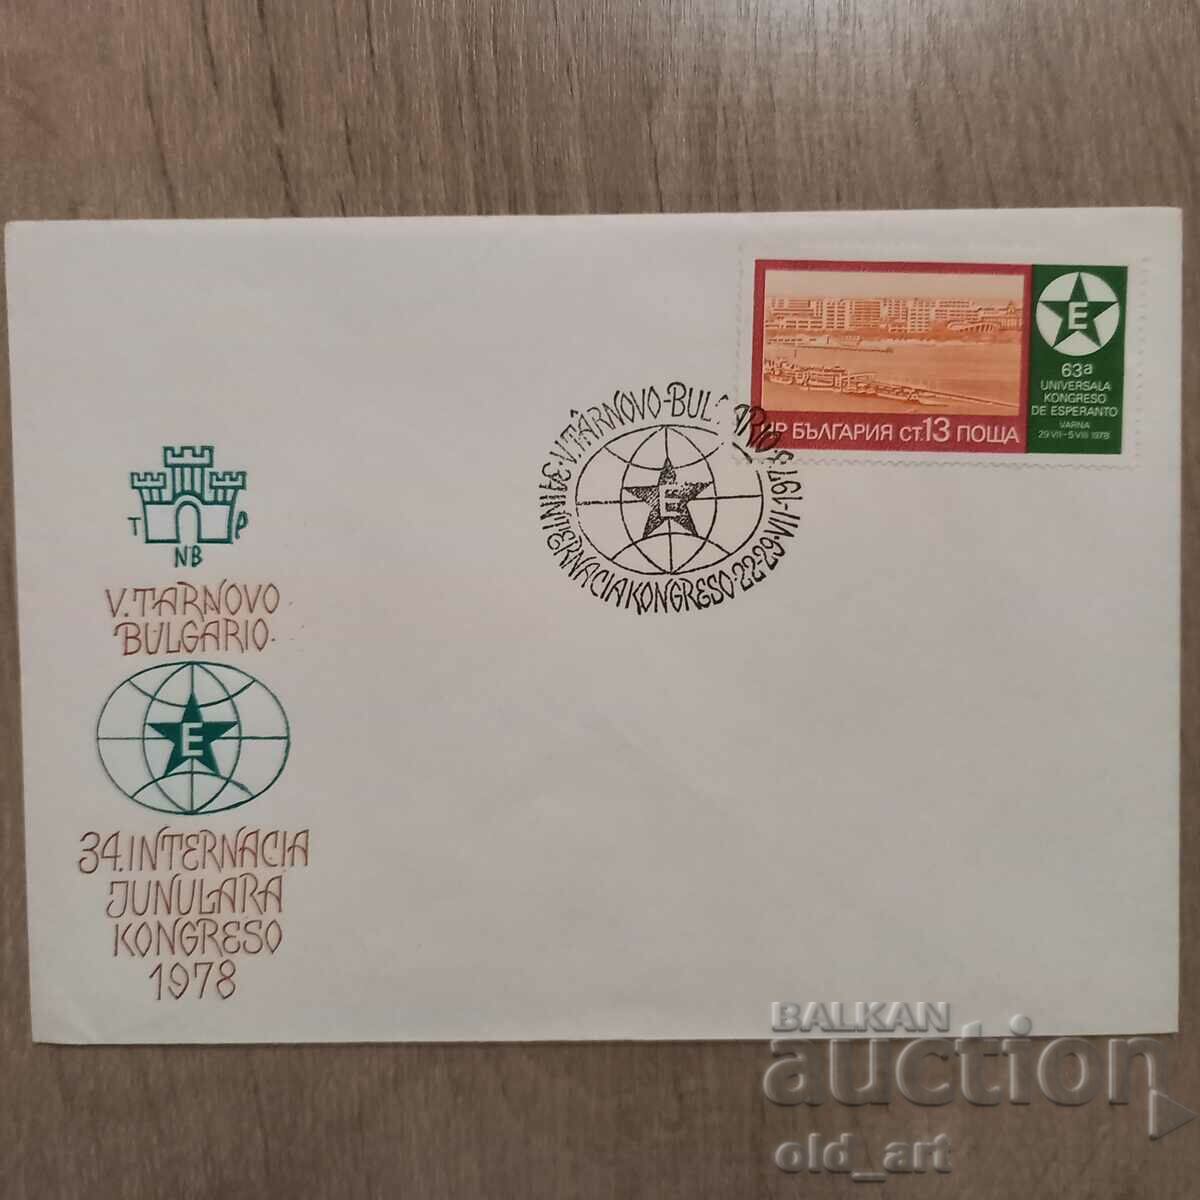 Postal envelope - 34 Int. Eperanto congress